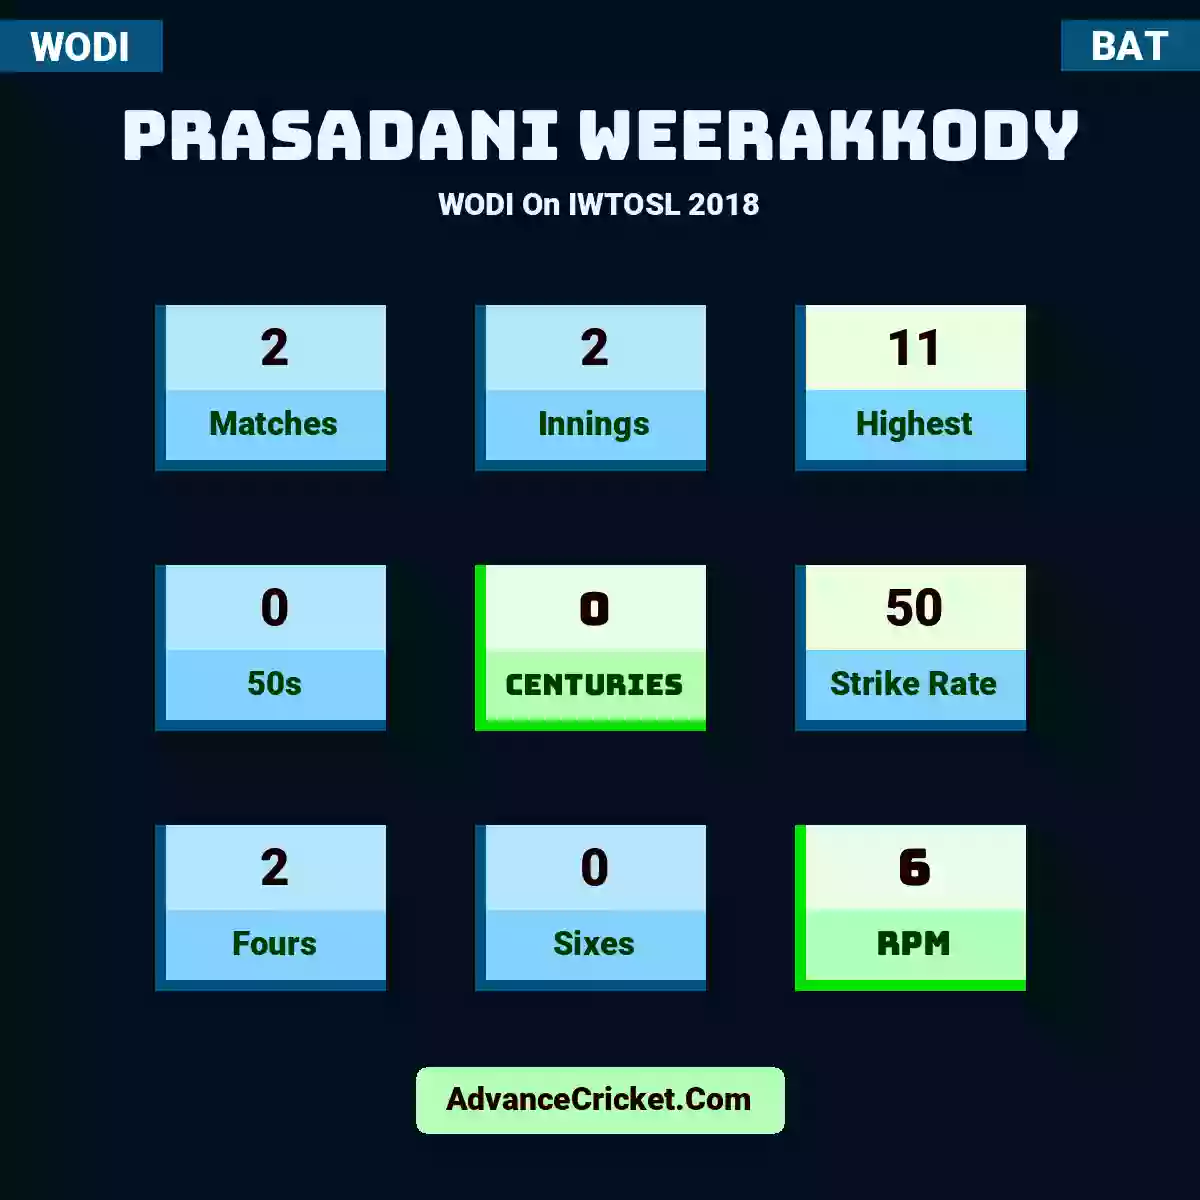 Prasadani Weerakkody WODI  On IWTOSL 2018, Prasadani Weerakkody played 2 matches, scored 11 runs as highest, 0 half-centuries, and 0 centuries, with a strike rate of 50. P.Weerakkody hit 2 fours and 0 sixes, with an RPM of 6.